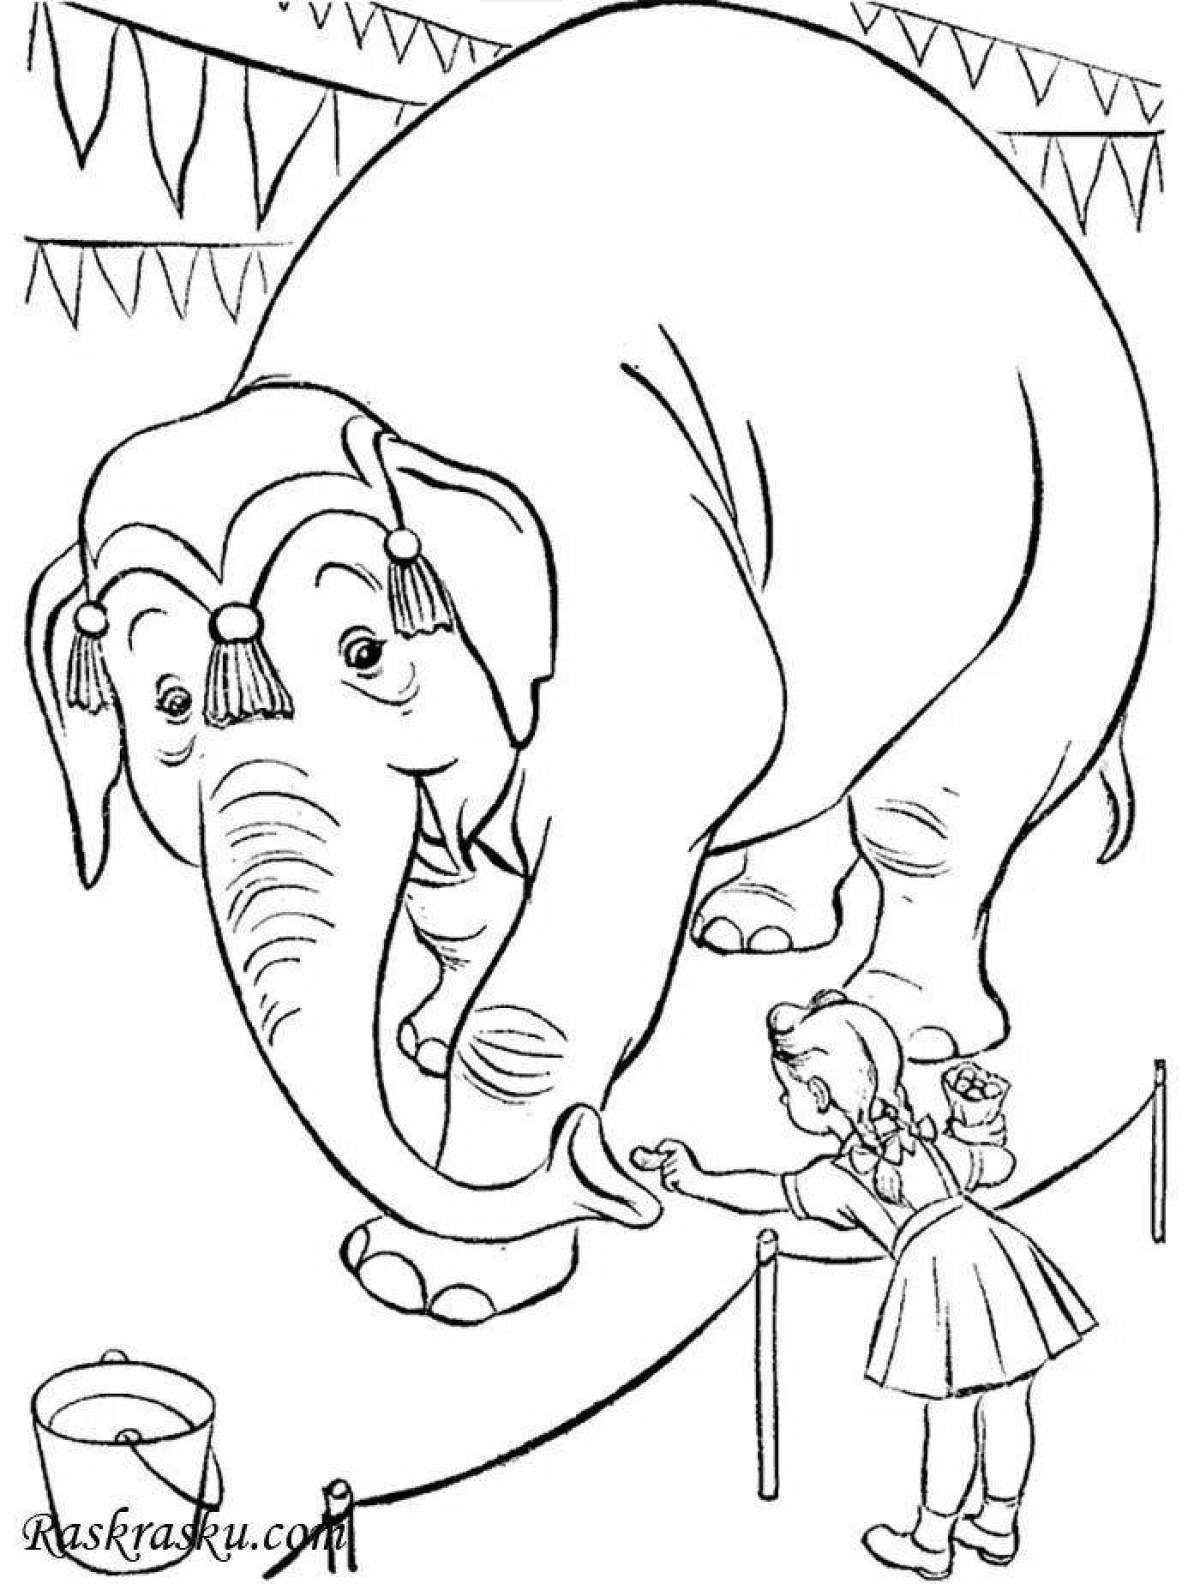 To the story of Kuprin the elephant grade 3 #9